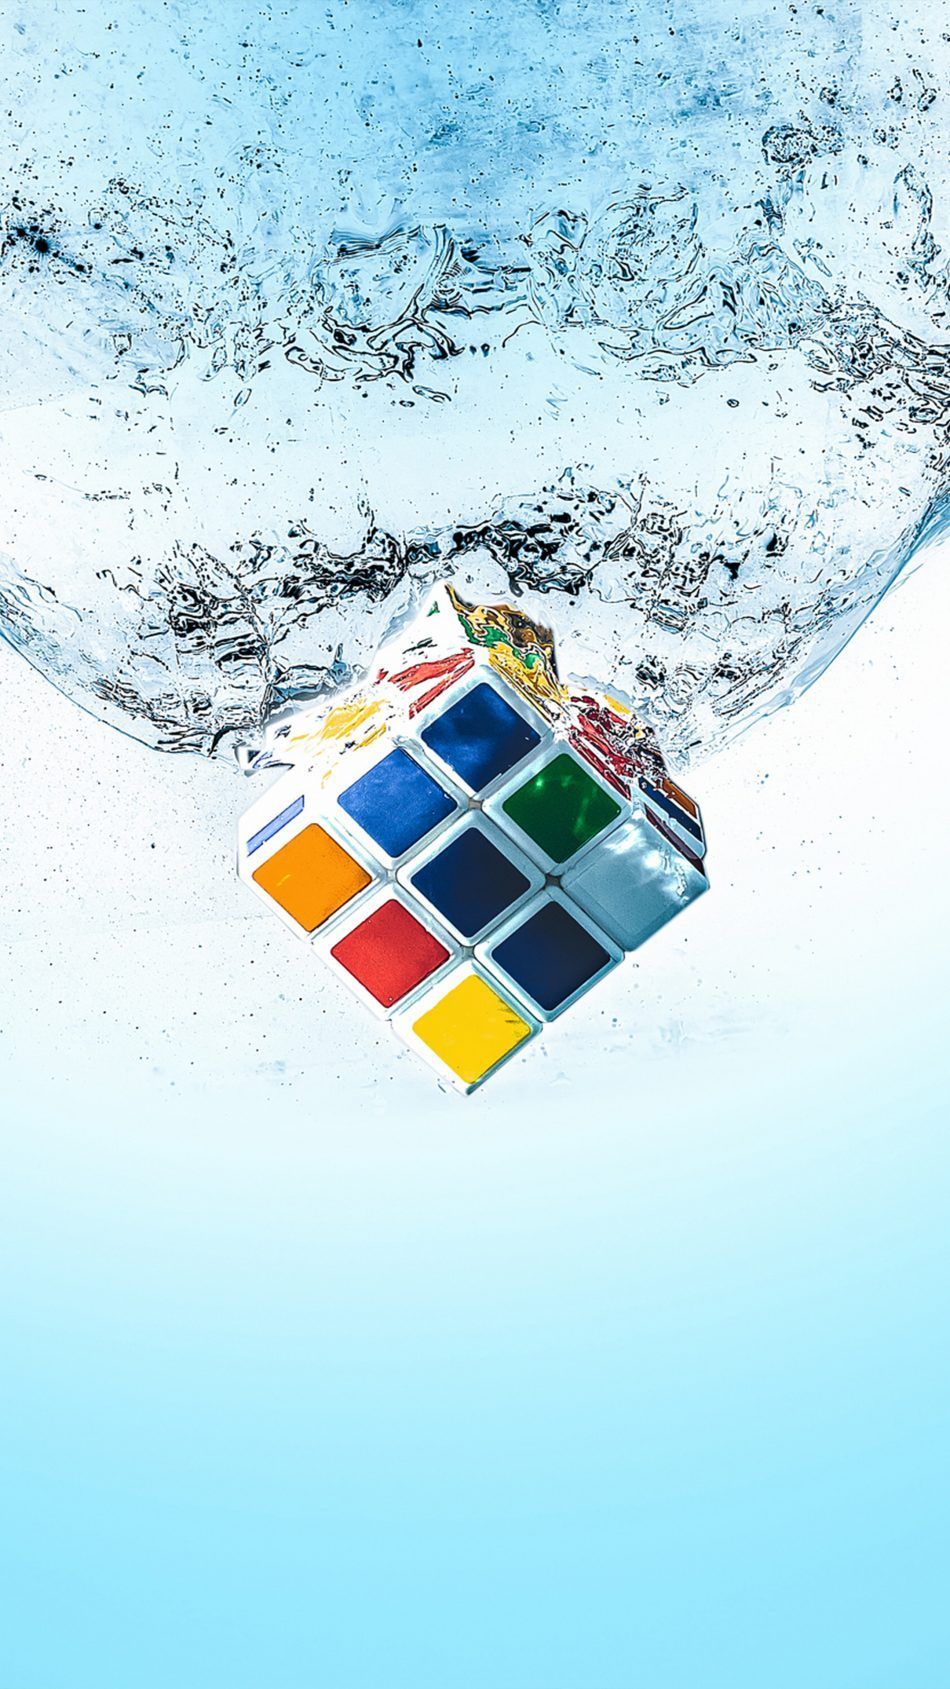 Rubik's Cube Splash Water Free 4K Ultra HD Mobile Wallpaper. Android wallpaper, Rubiks cube, iPhone wallpaper